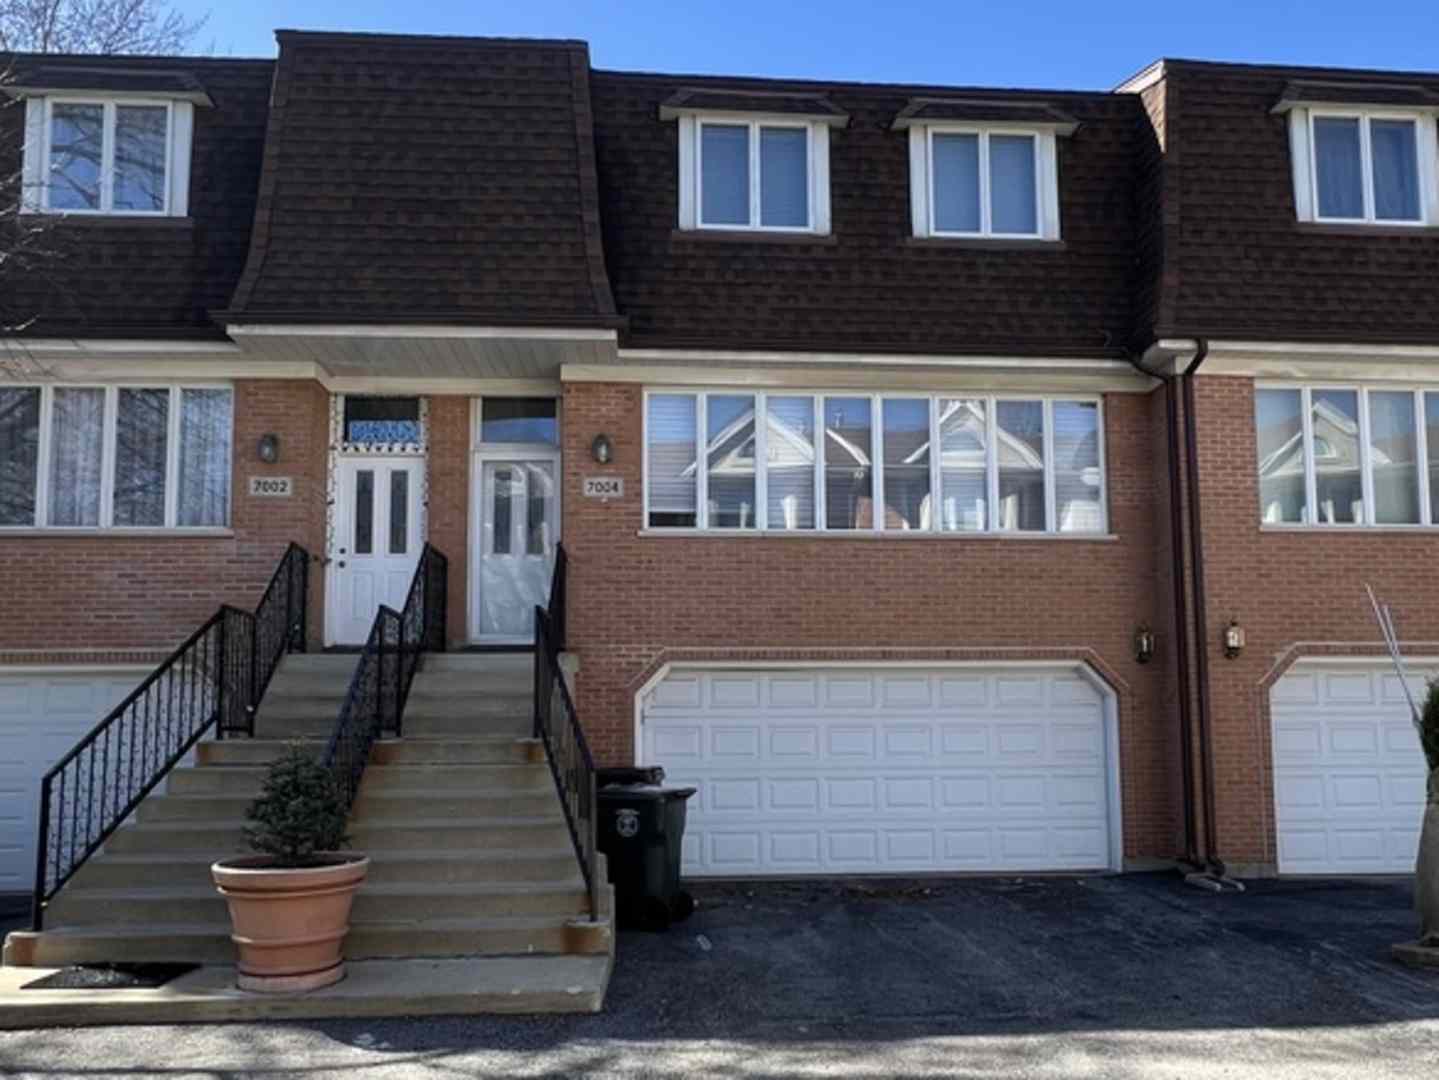 Skokie, IL Single Family Homes For Sale - 20 Listings